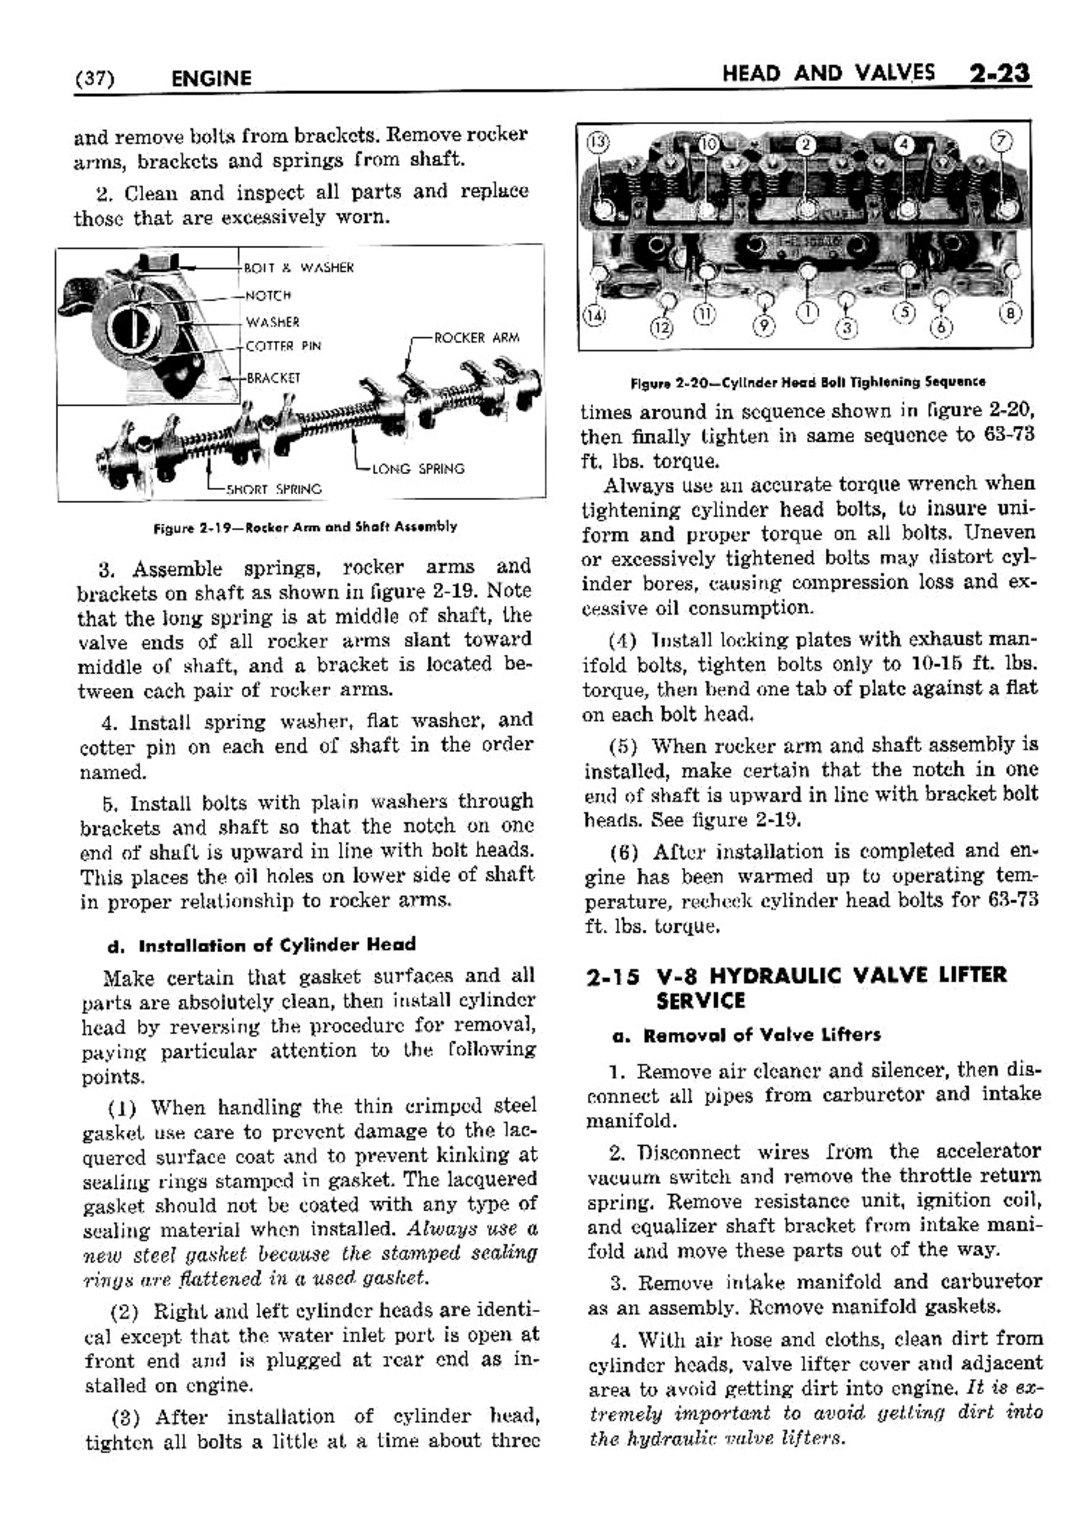 n_03 1953 Buick Shop Manual - Engine-023-023.jpg